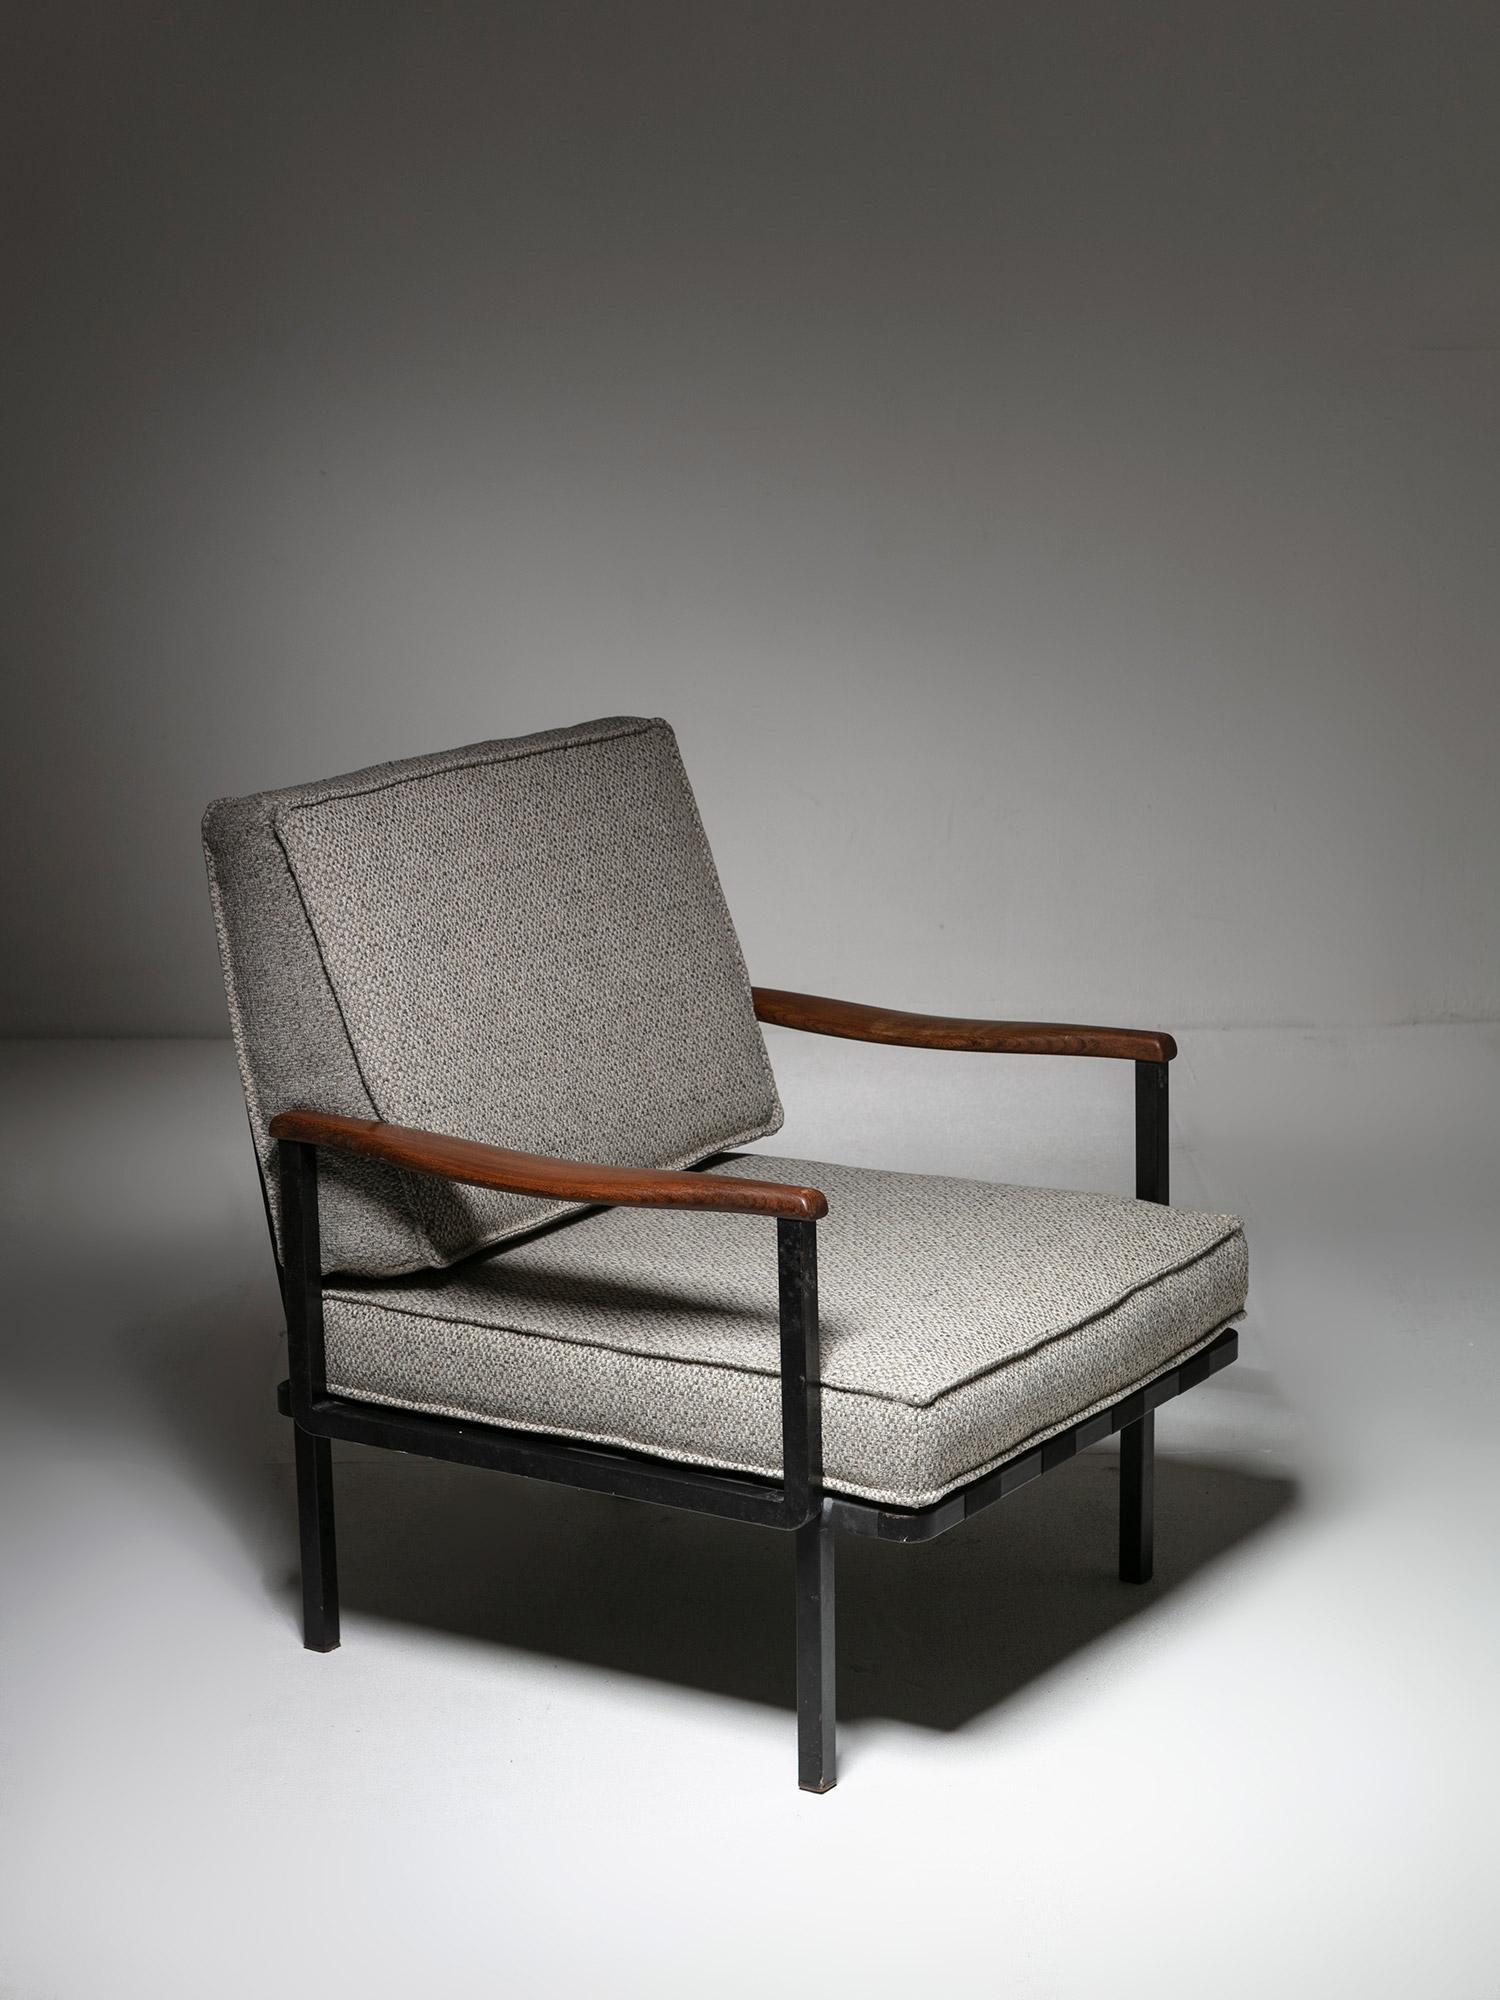 Metallic Thread Rare Pair of Lounge Chairs Model P24 by Osvaldo Borsani for Tecno, Italy, 1960s For Sale